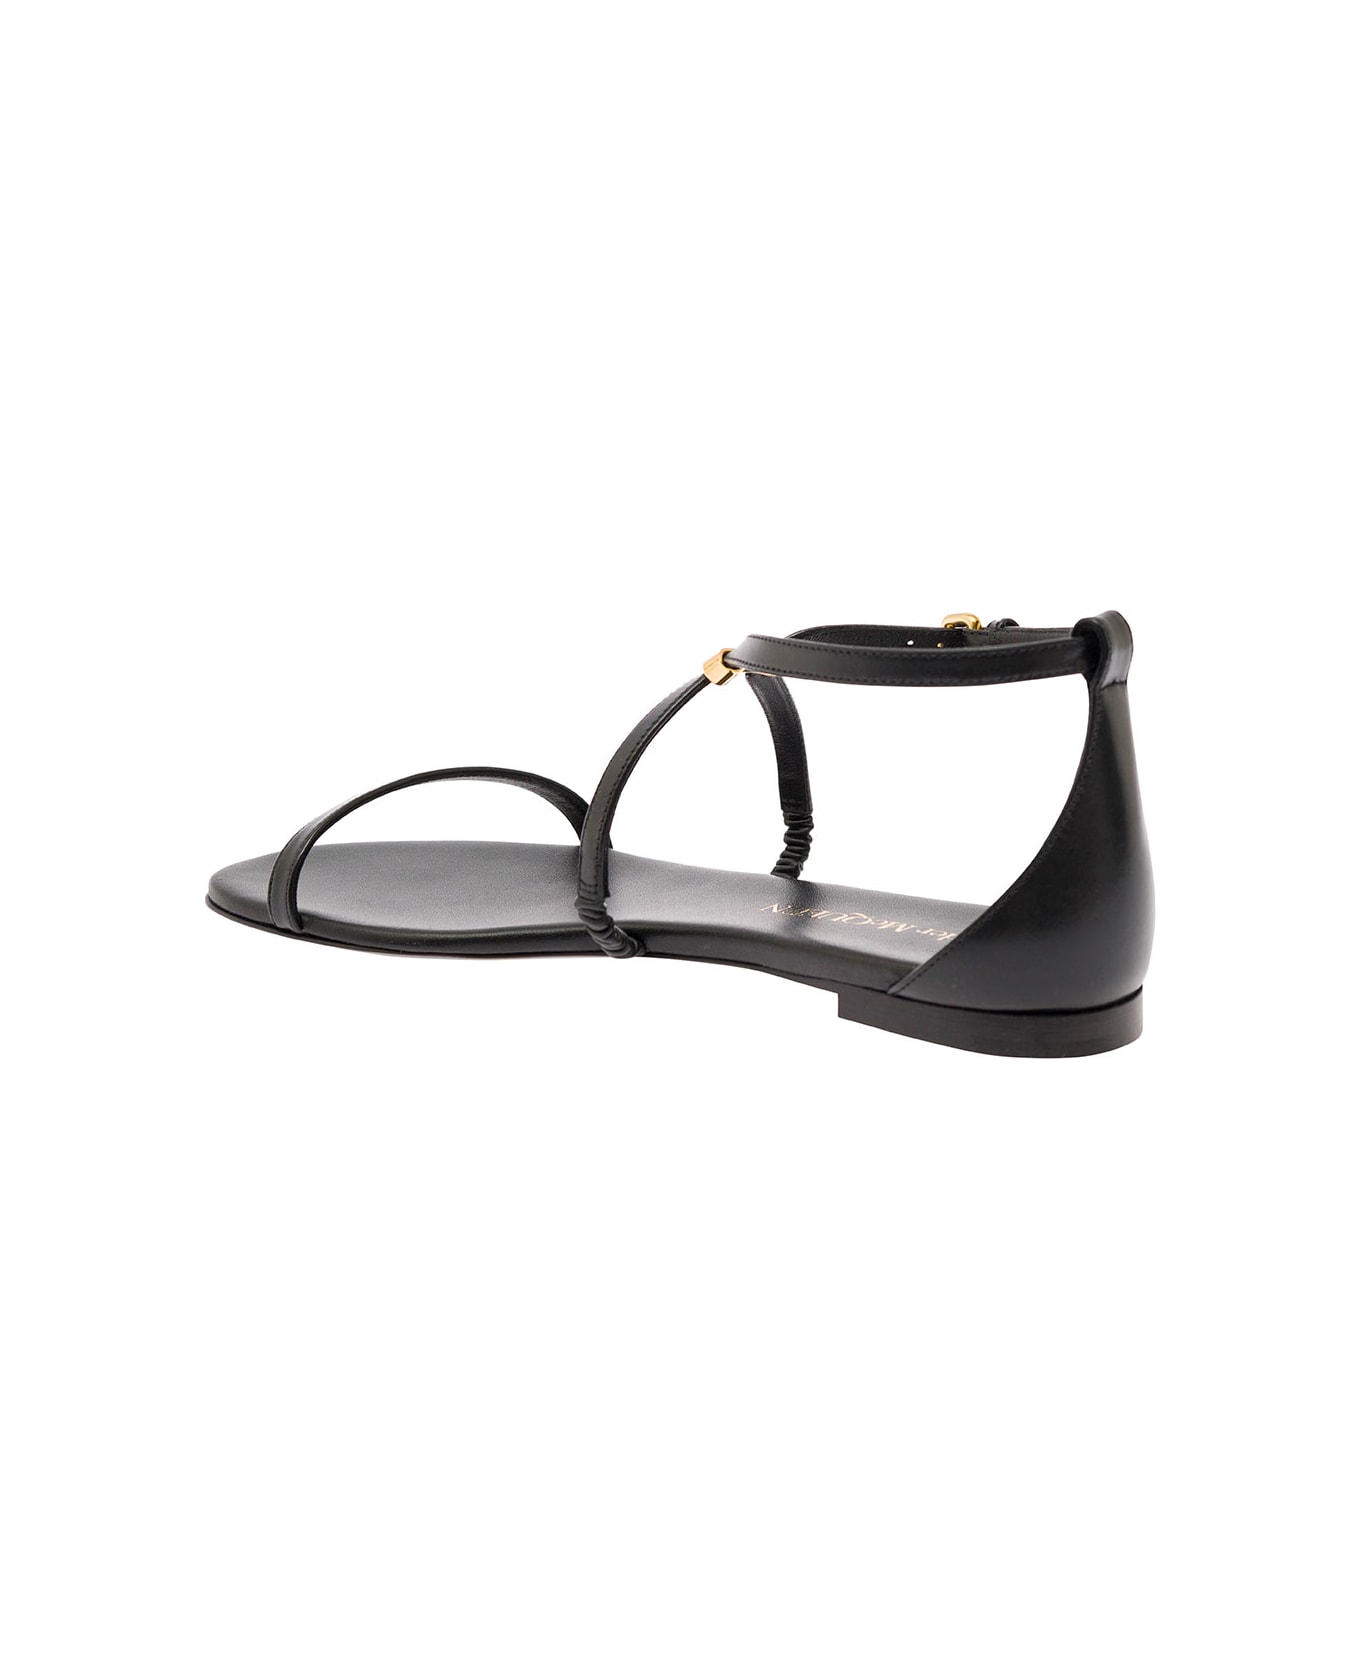 Alexander McQueen Leather Sandals - Black サンダル